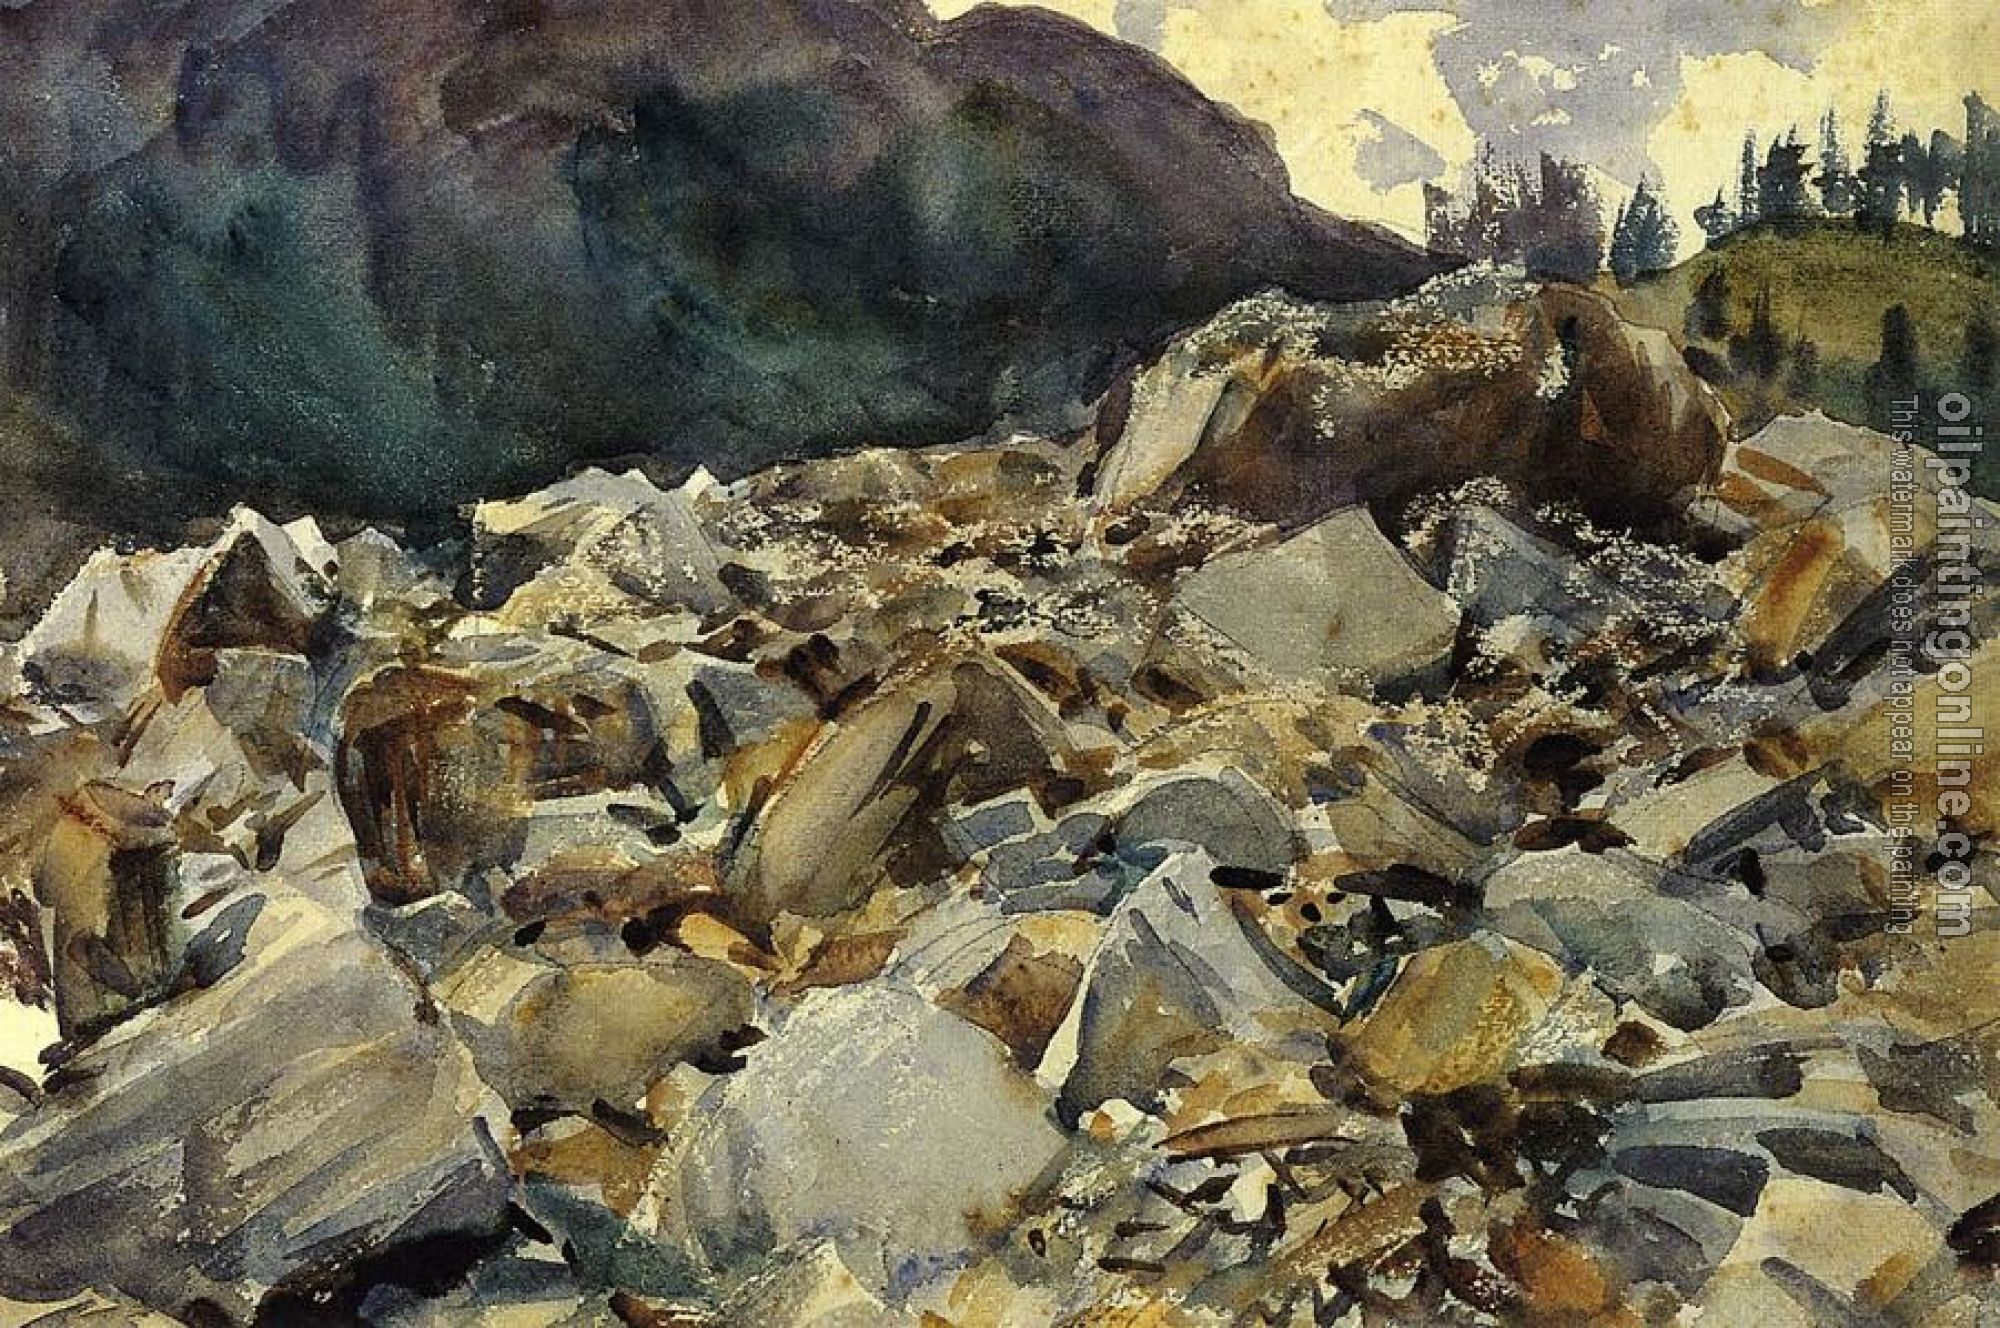 Sargent, John Singer - Purtud, Alpine Scene and Boulders